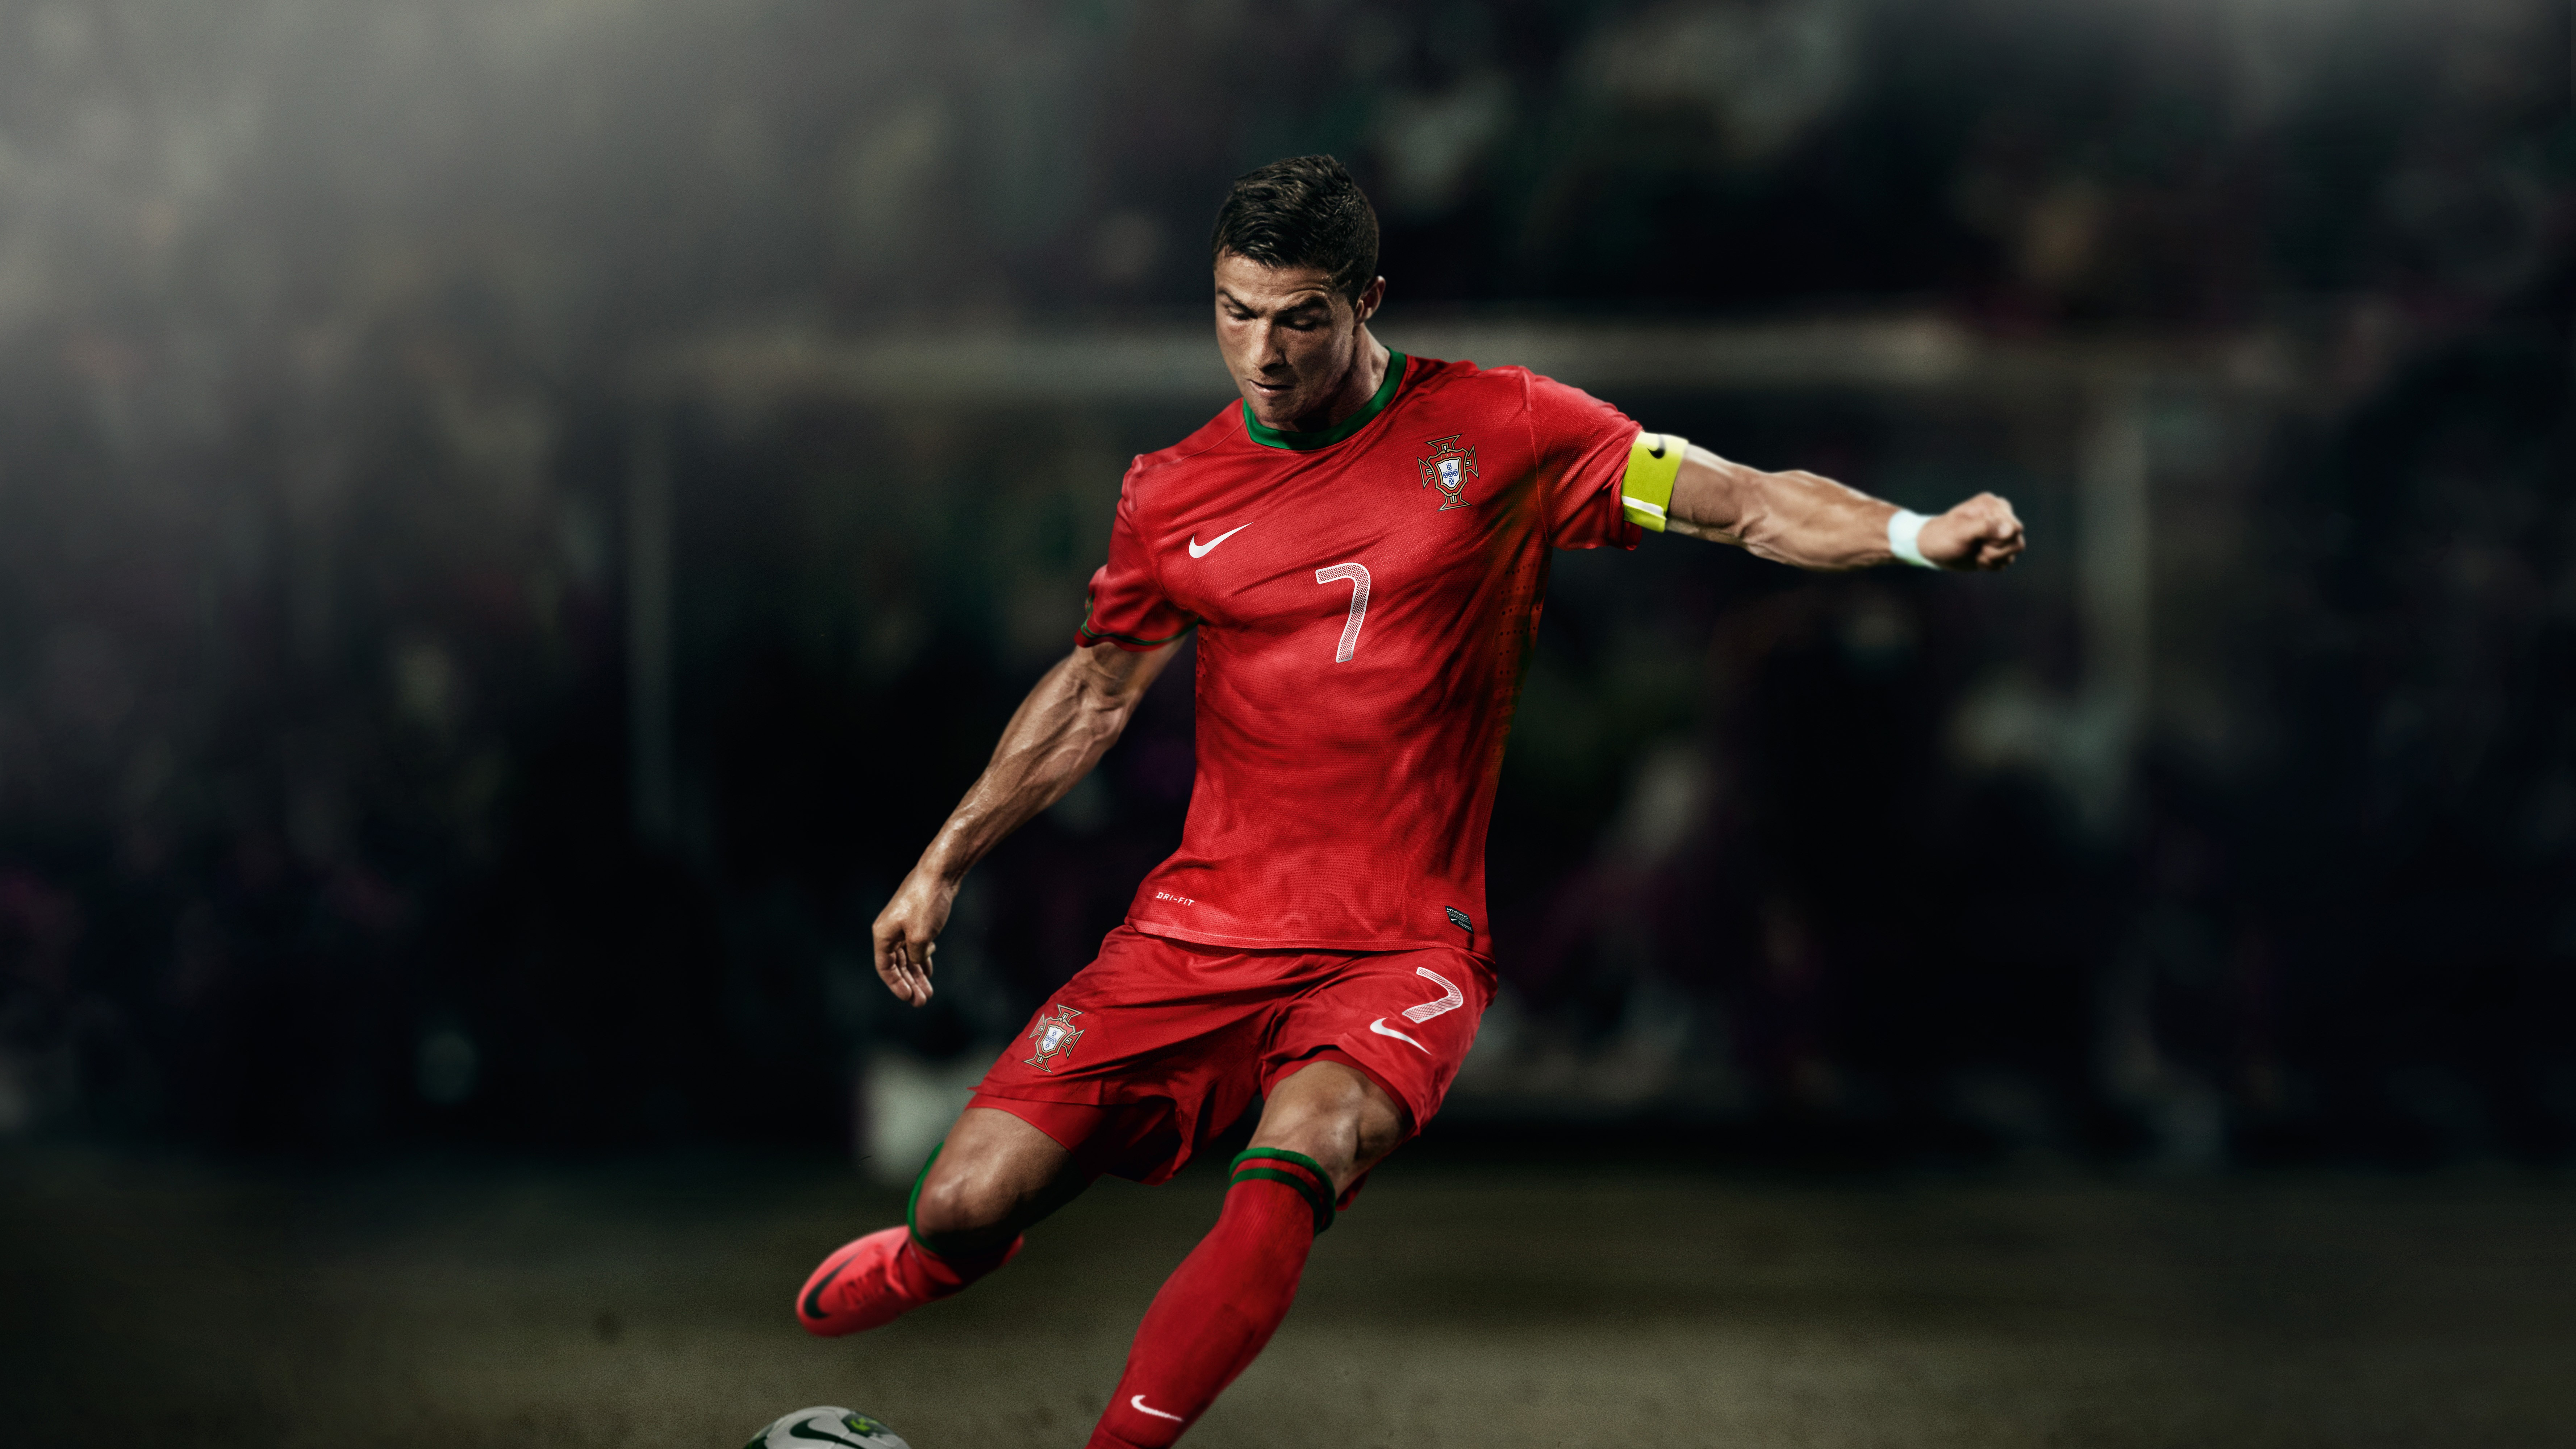 soccer wallpaper,football player,soccer player,player,red,football